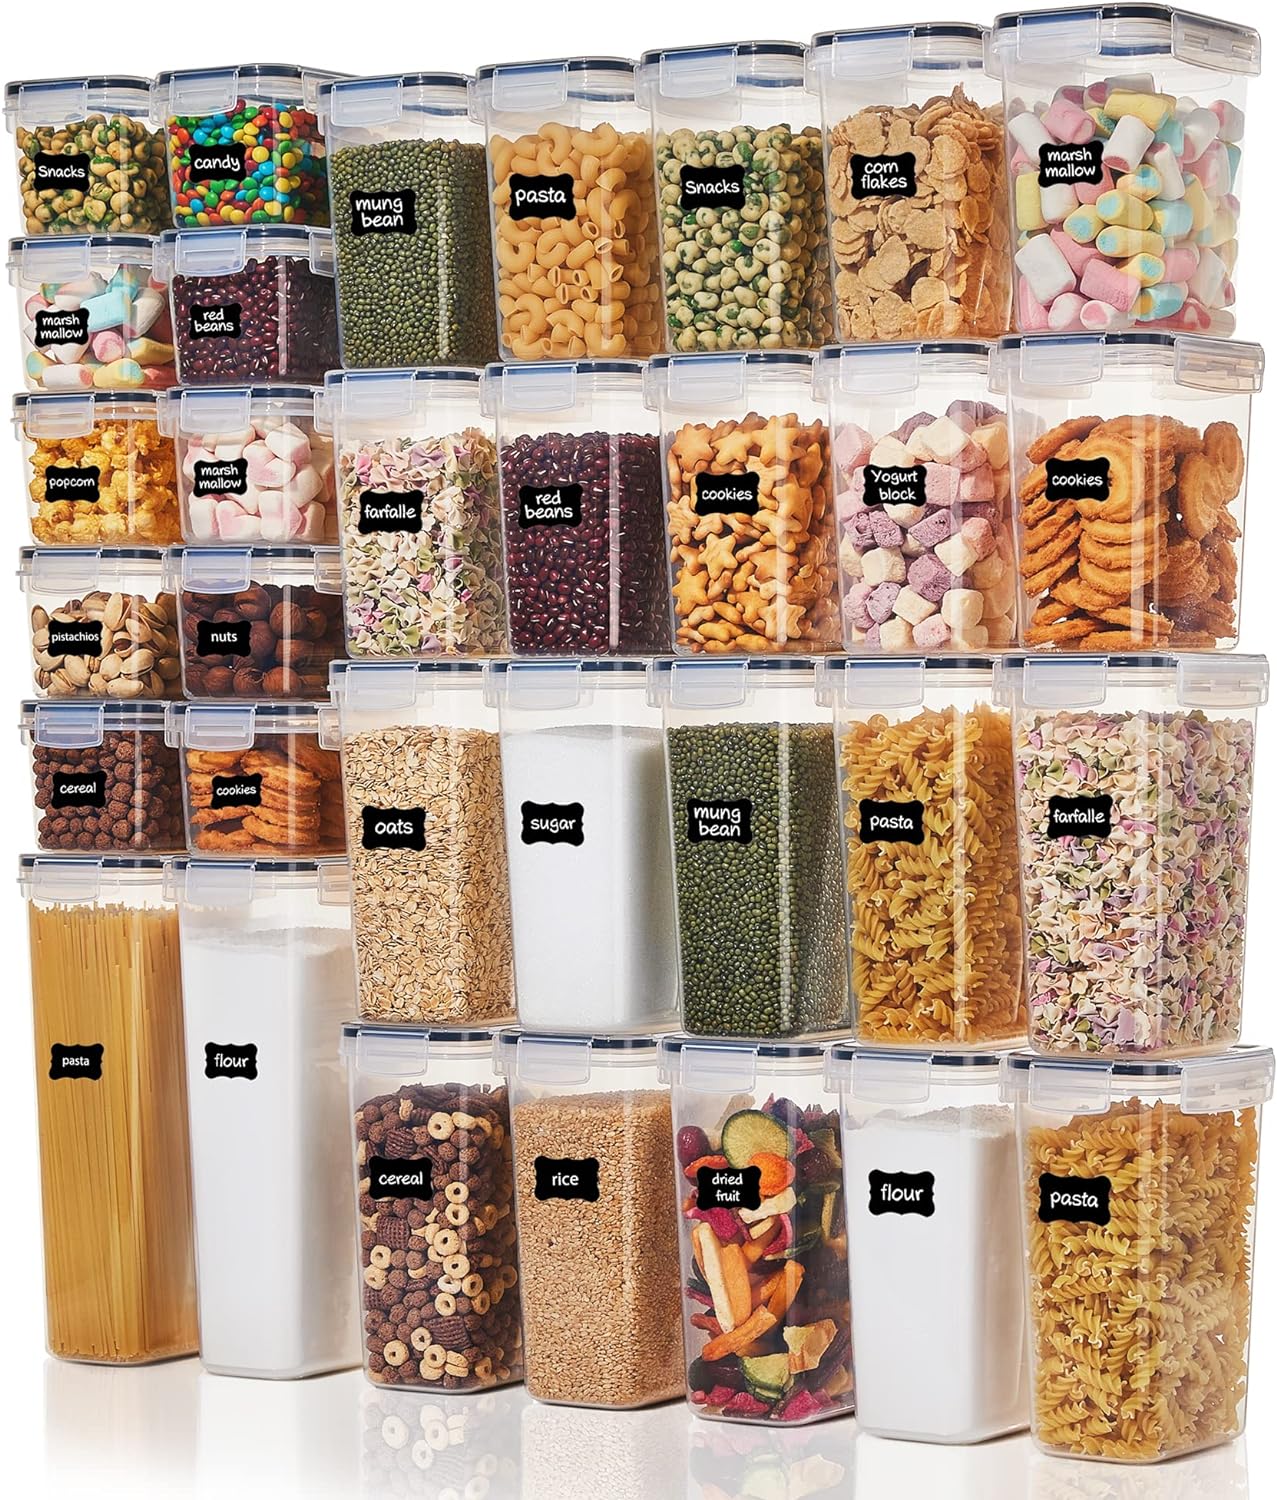  Food Storage & Organization Sets